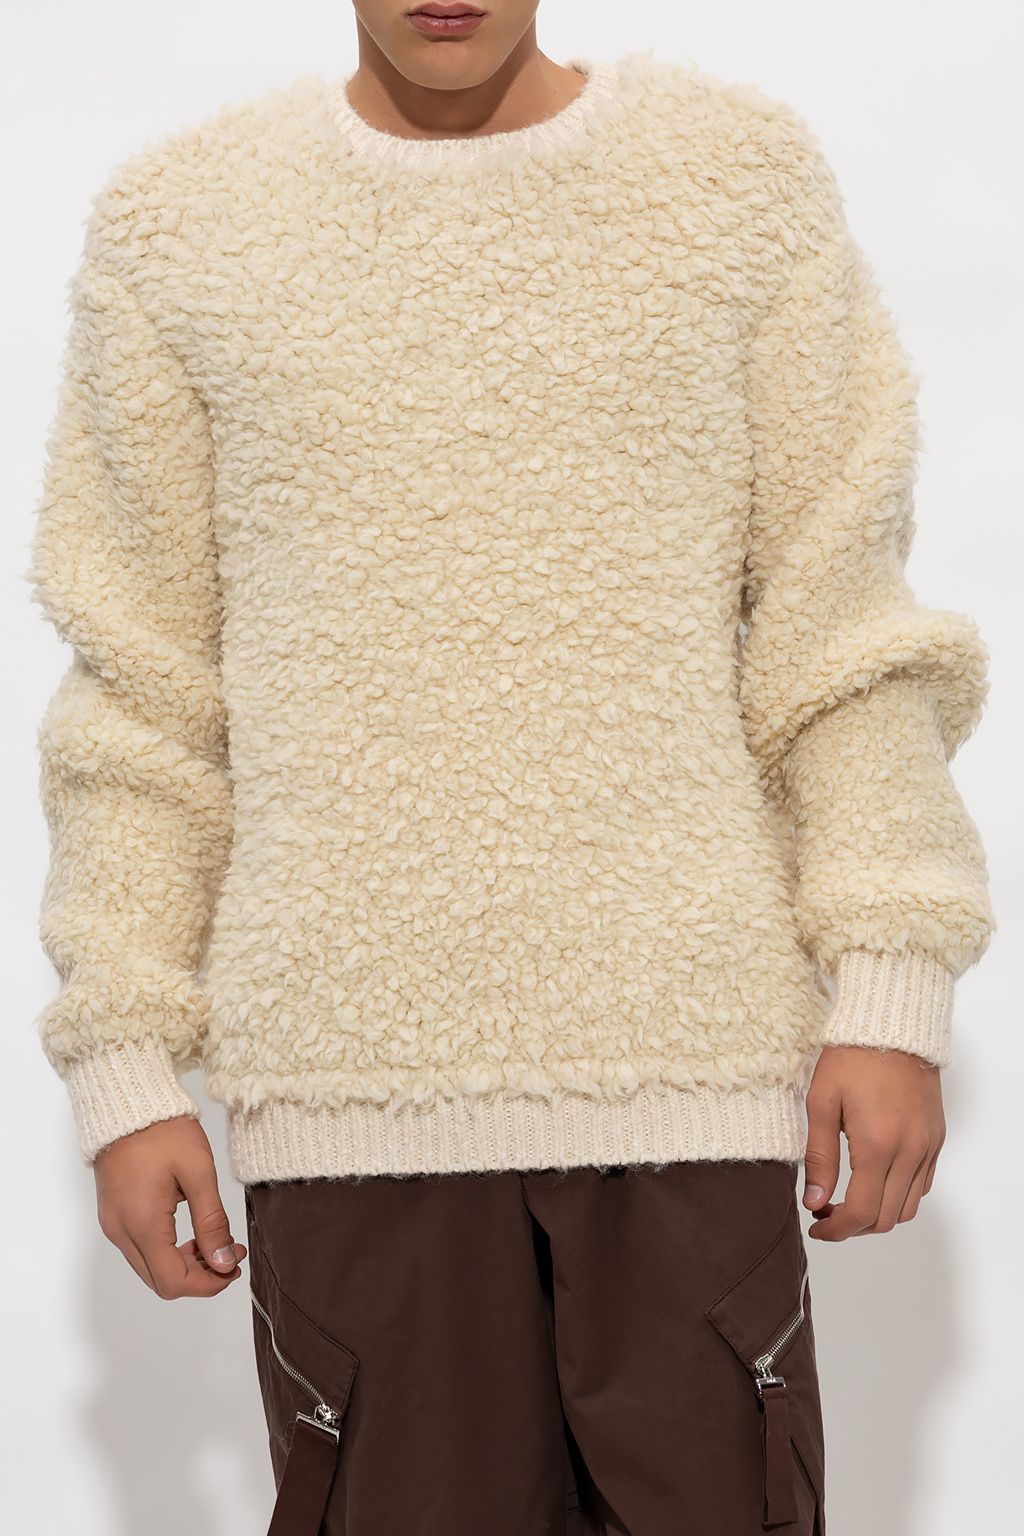 MARANT ‘Valentin’ wool Classic sweater